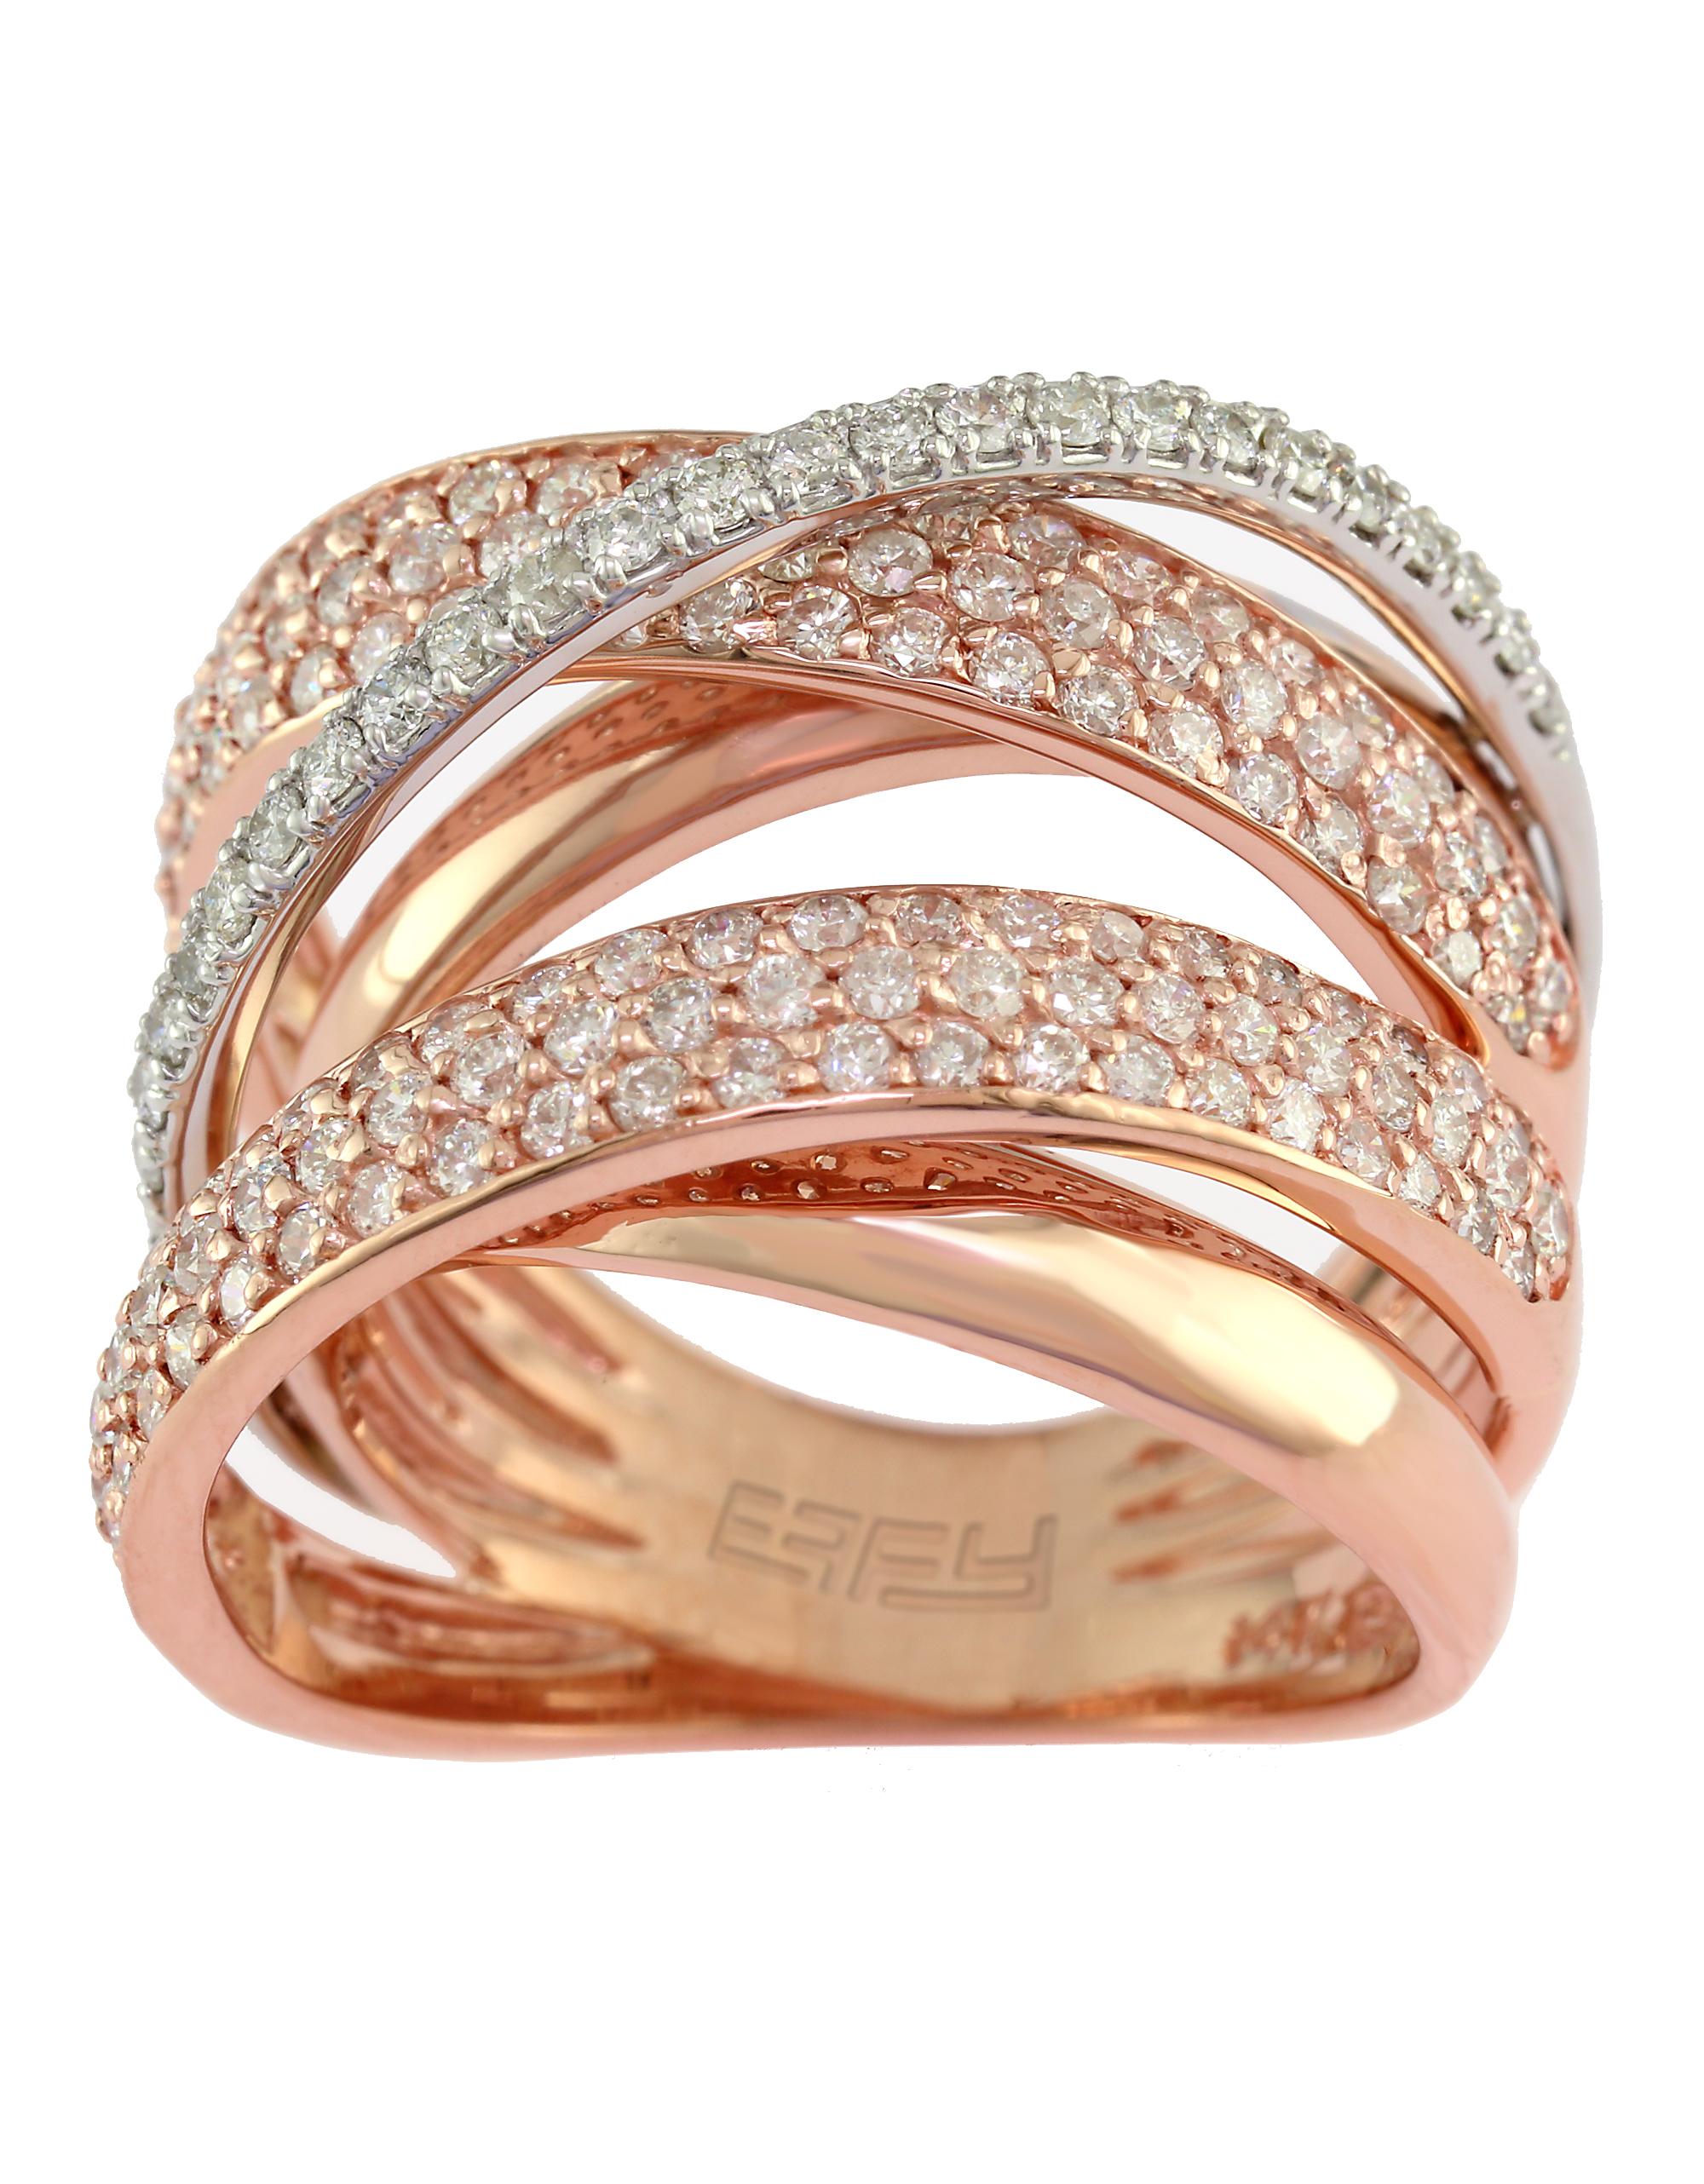 Designer Effy's 1.6 Carat Diamond Cocktail Ring 14 Karat Rose or White Gold Ring In New Condition In New York, NY